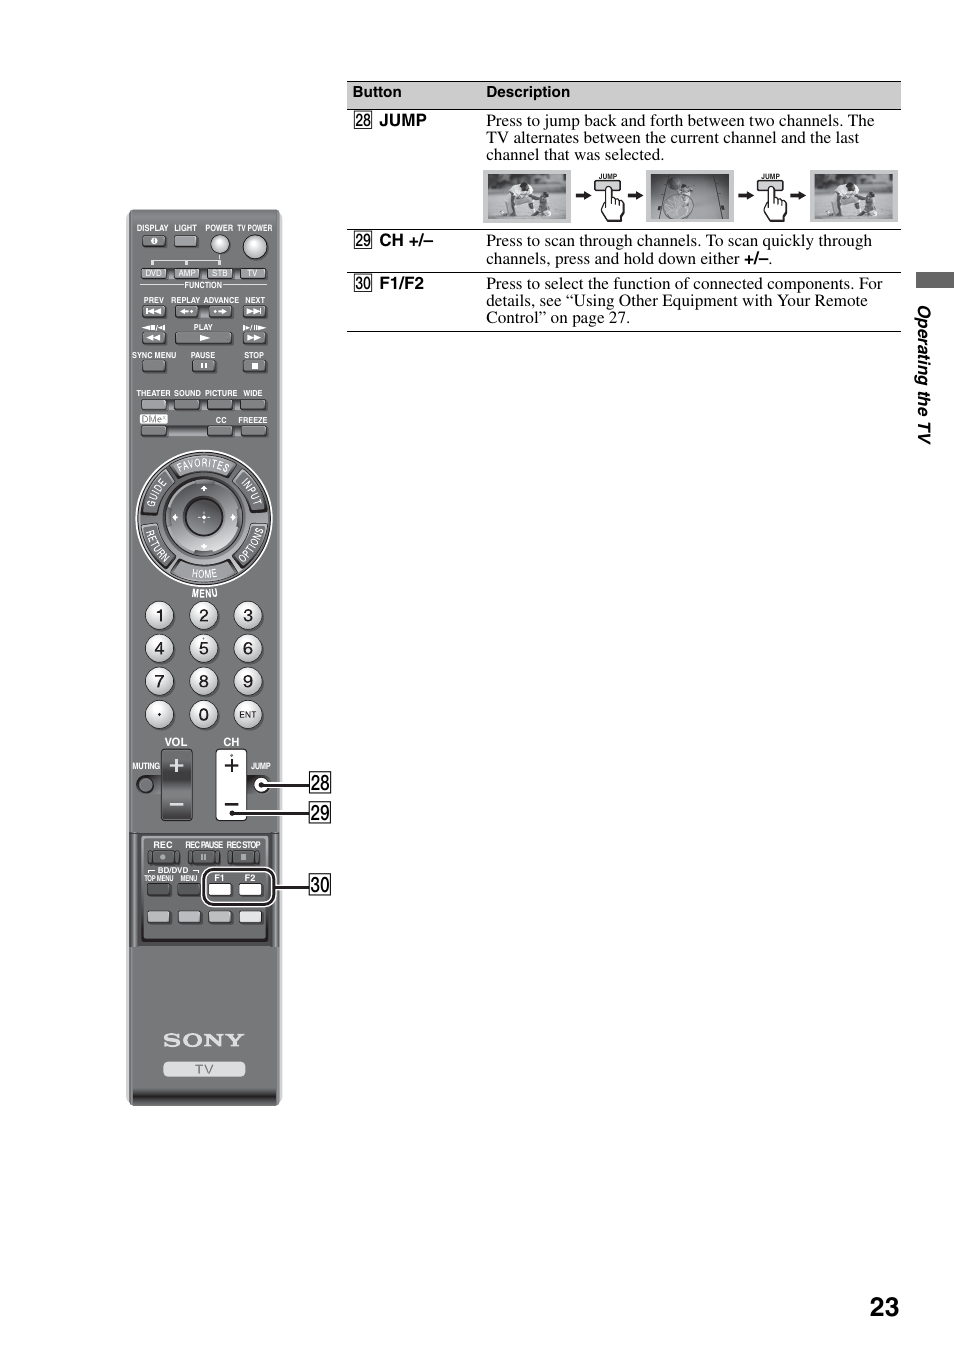 Wk wl e | Sony KDL-52XBR7 User Manual | Page 23 / 60